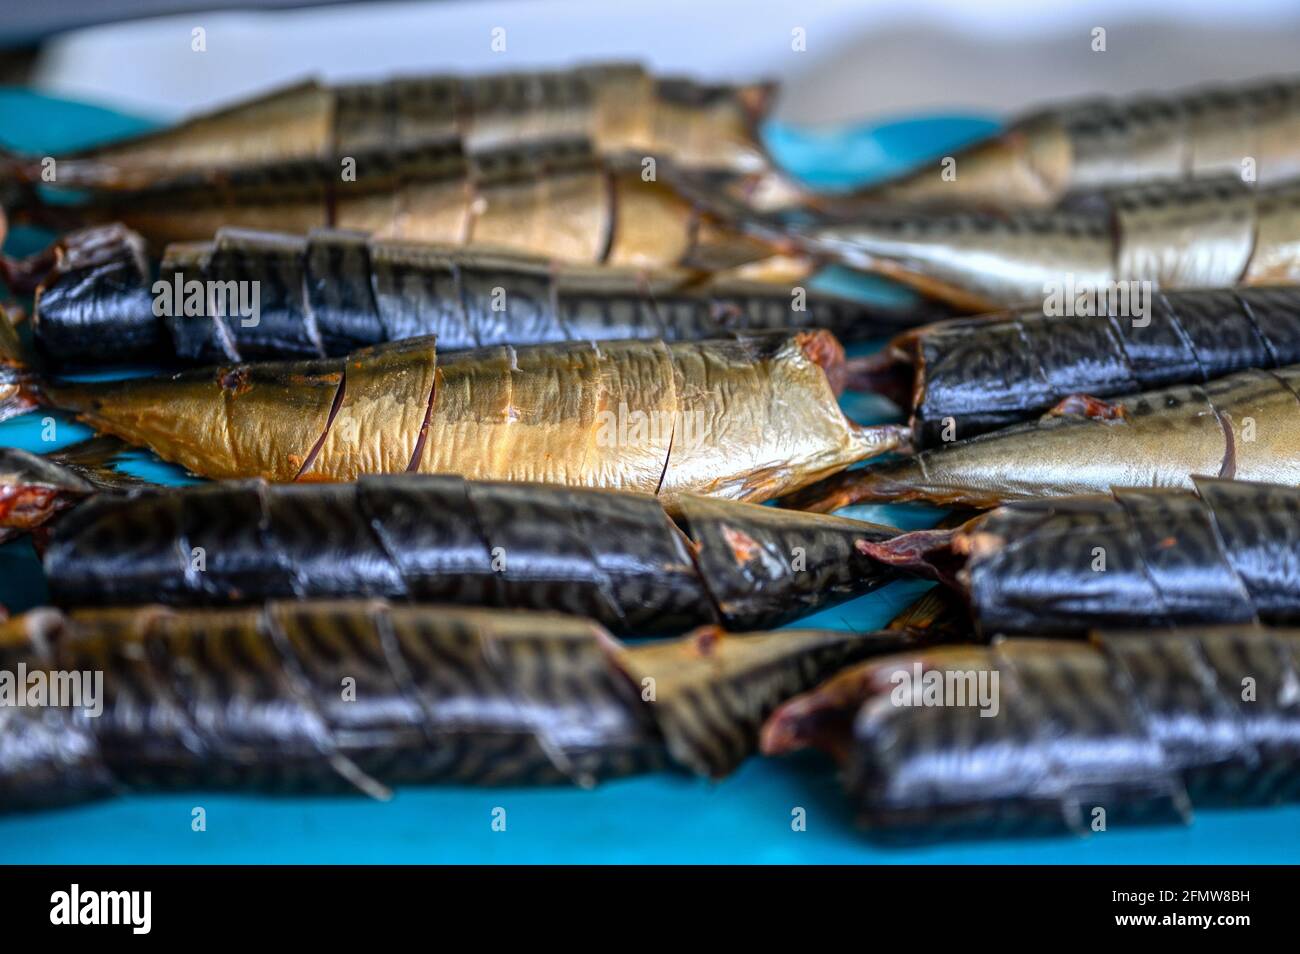 Pieces of smoked mackerel lie on a conveyor belt. Fish food factory. Stock Photo